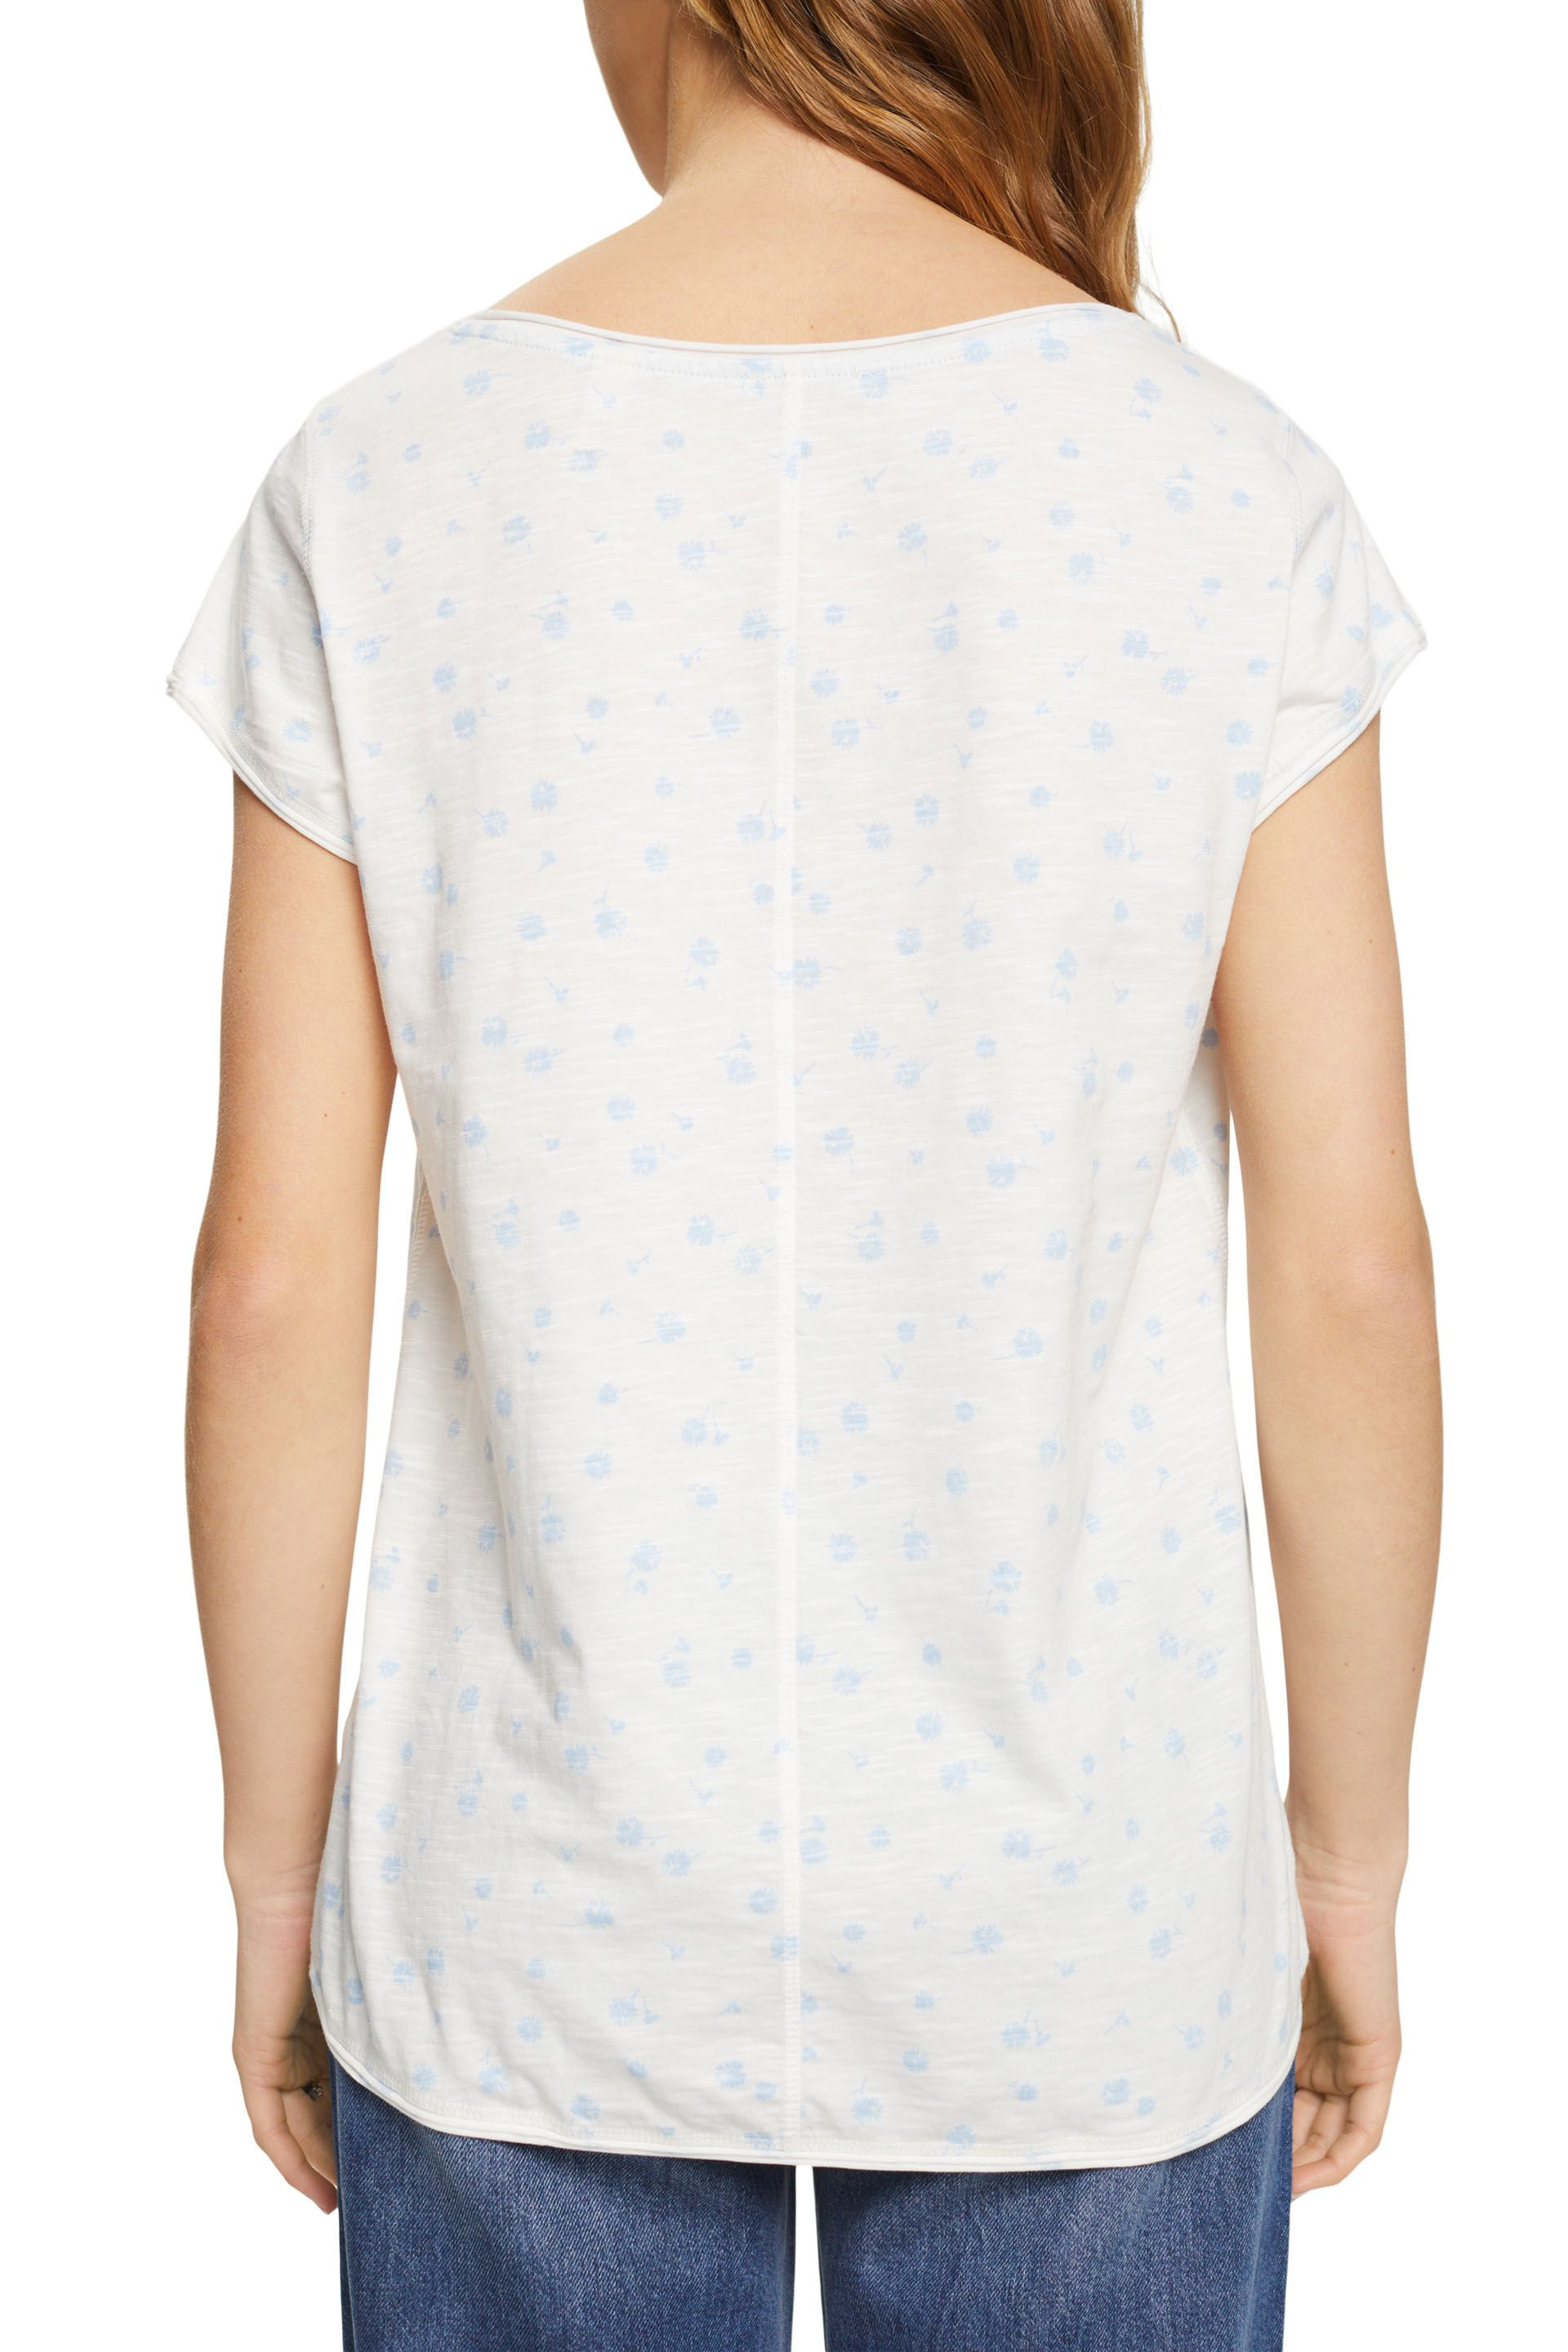 Esprit - T-shirt con stampa, Bianco, large image number 2